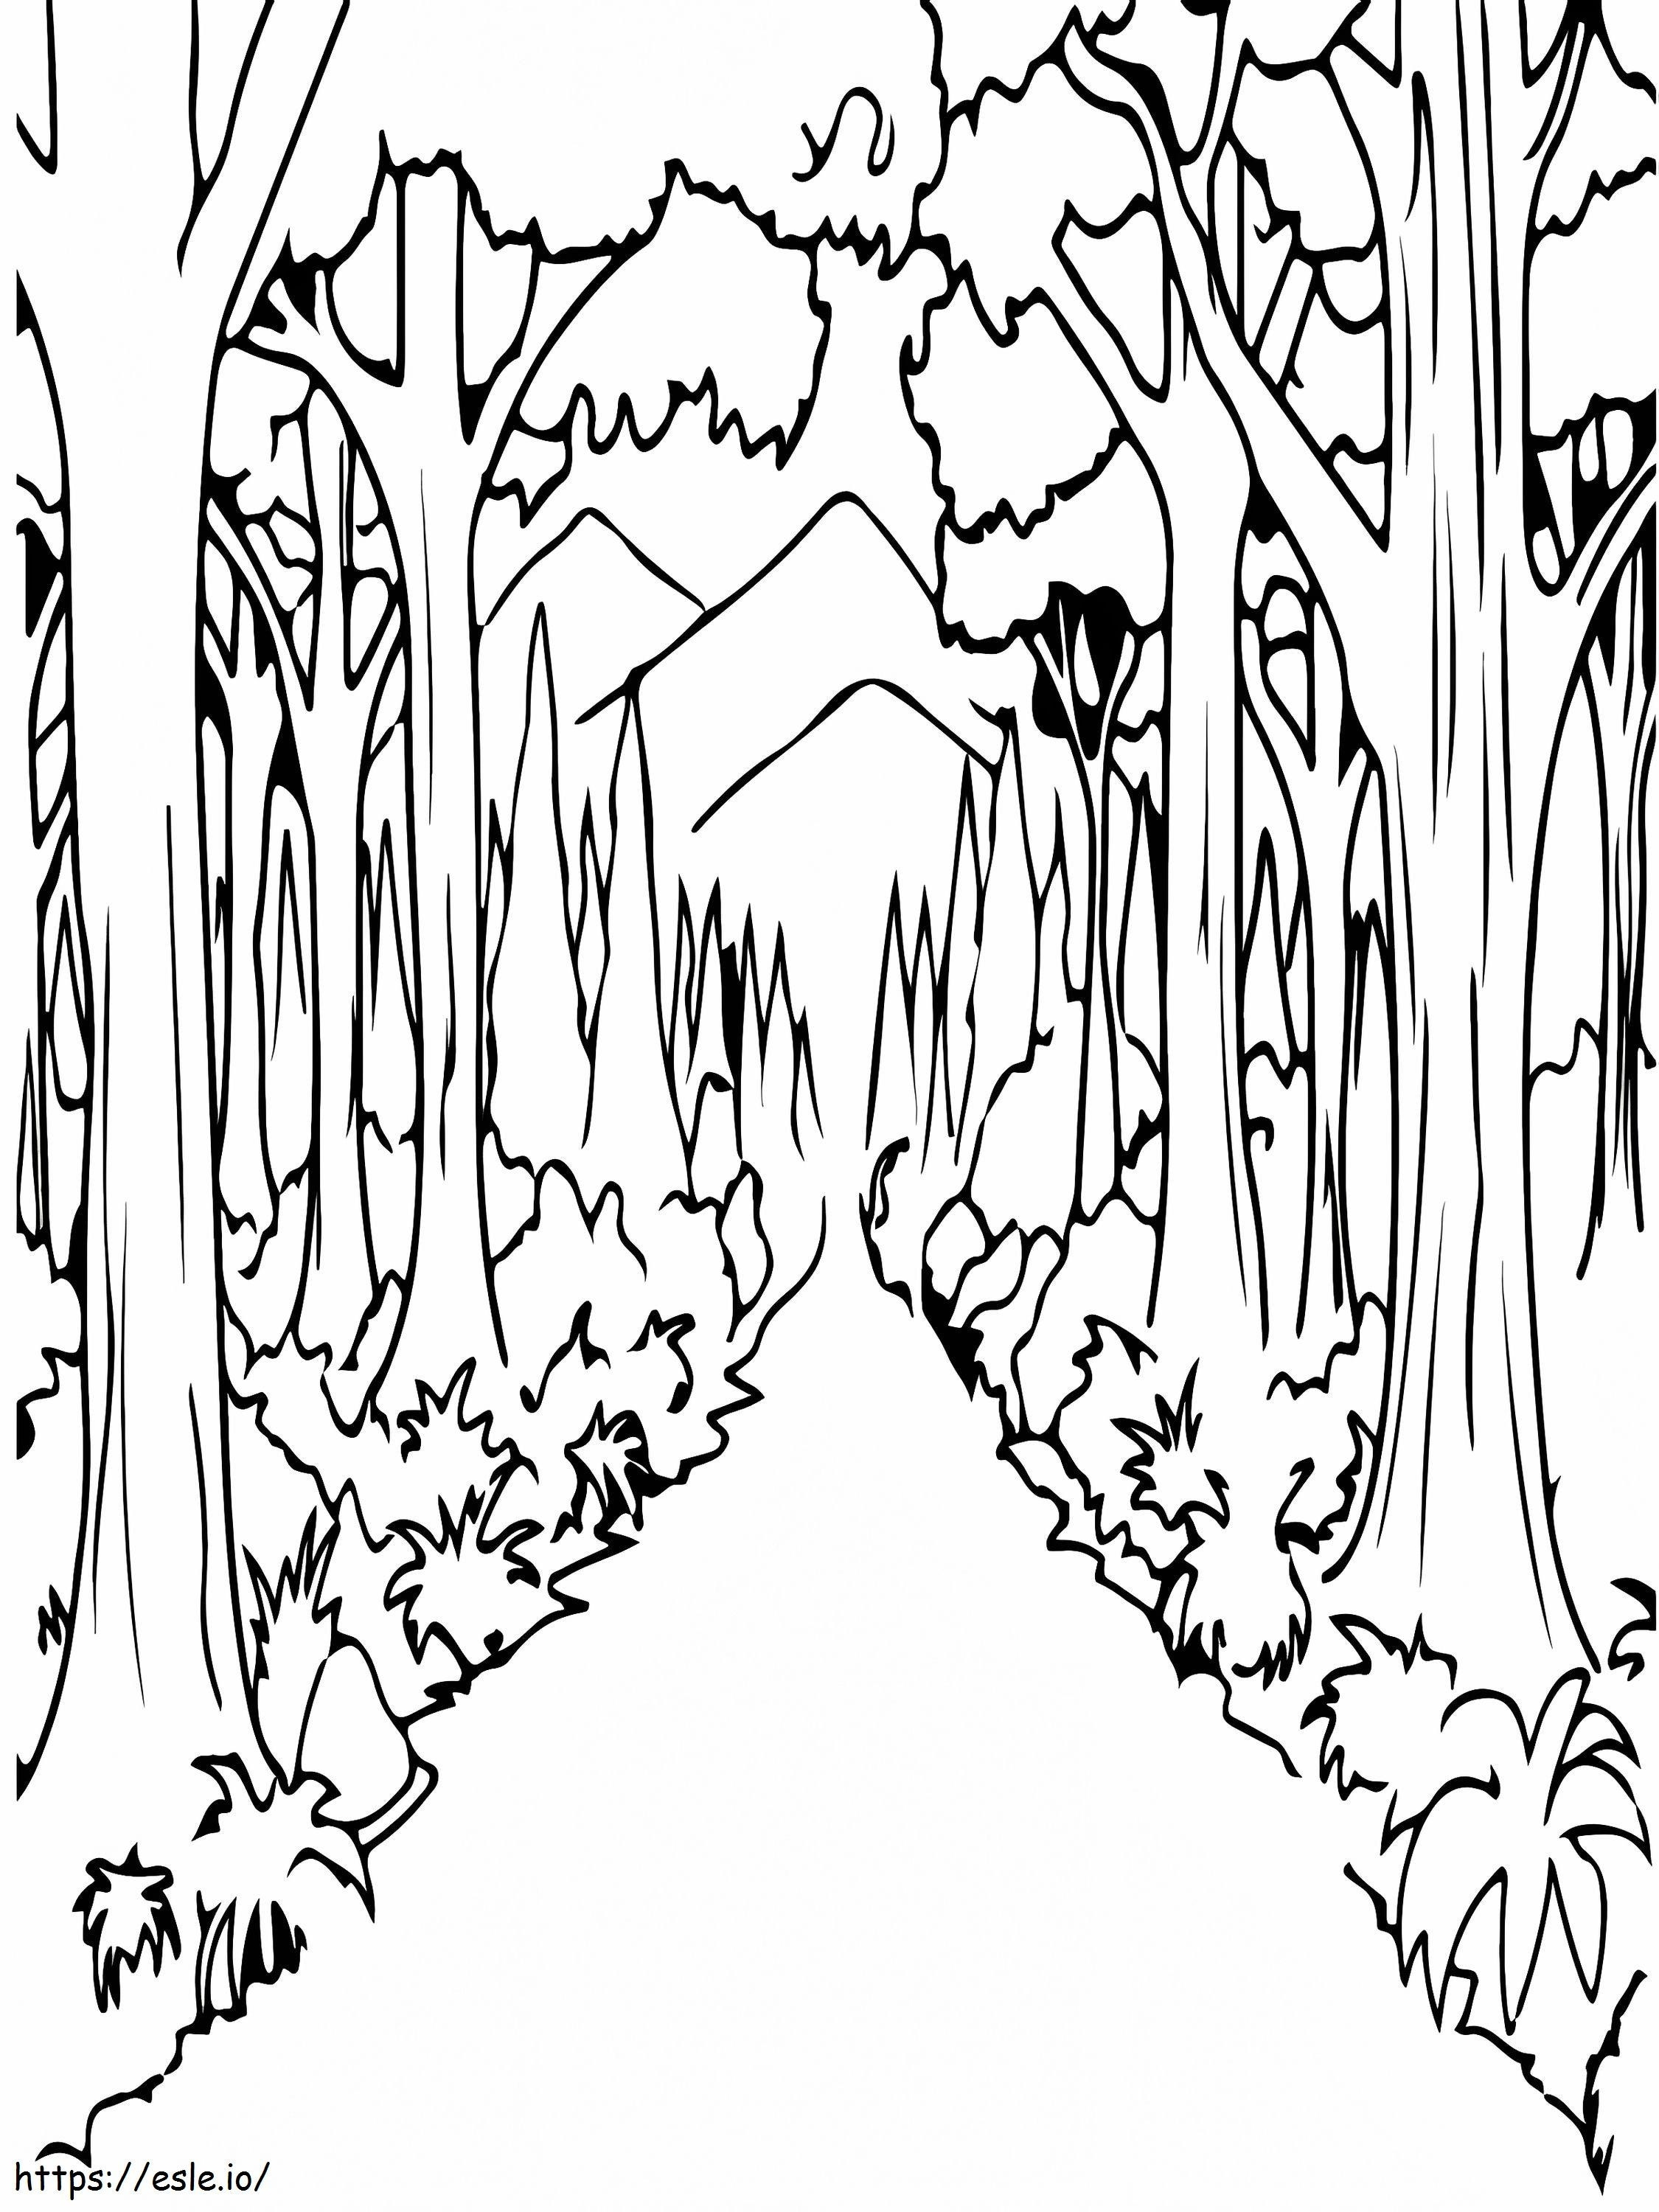 Estrada Reta da Floresta para colorir